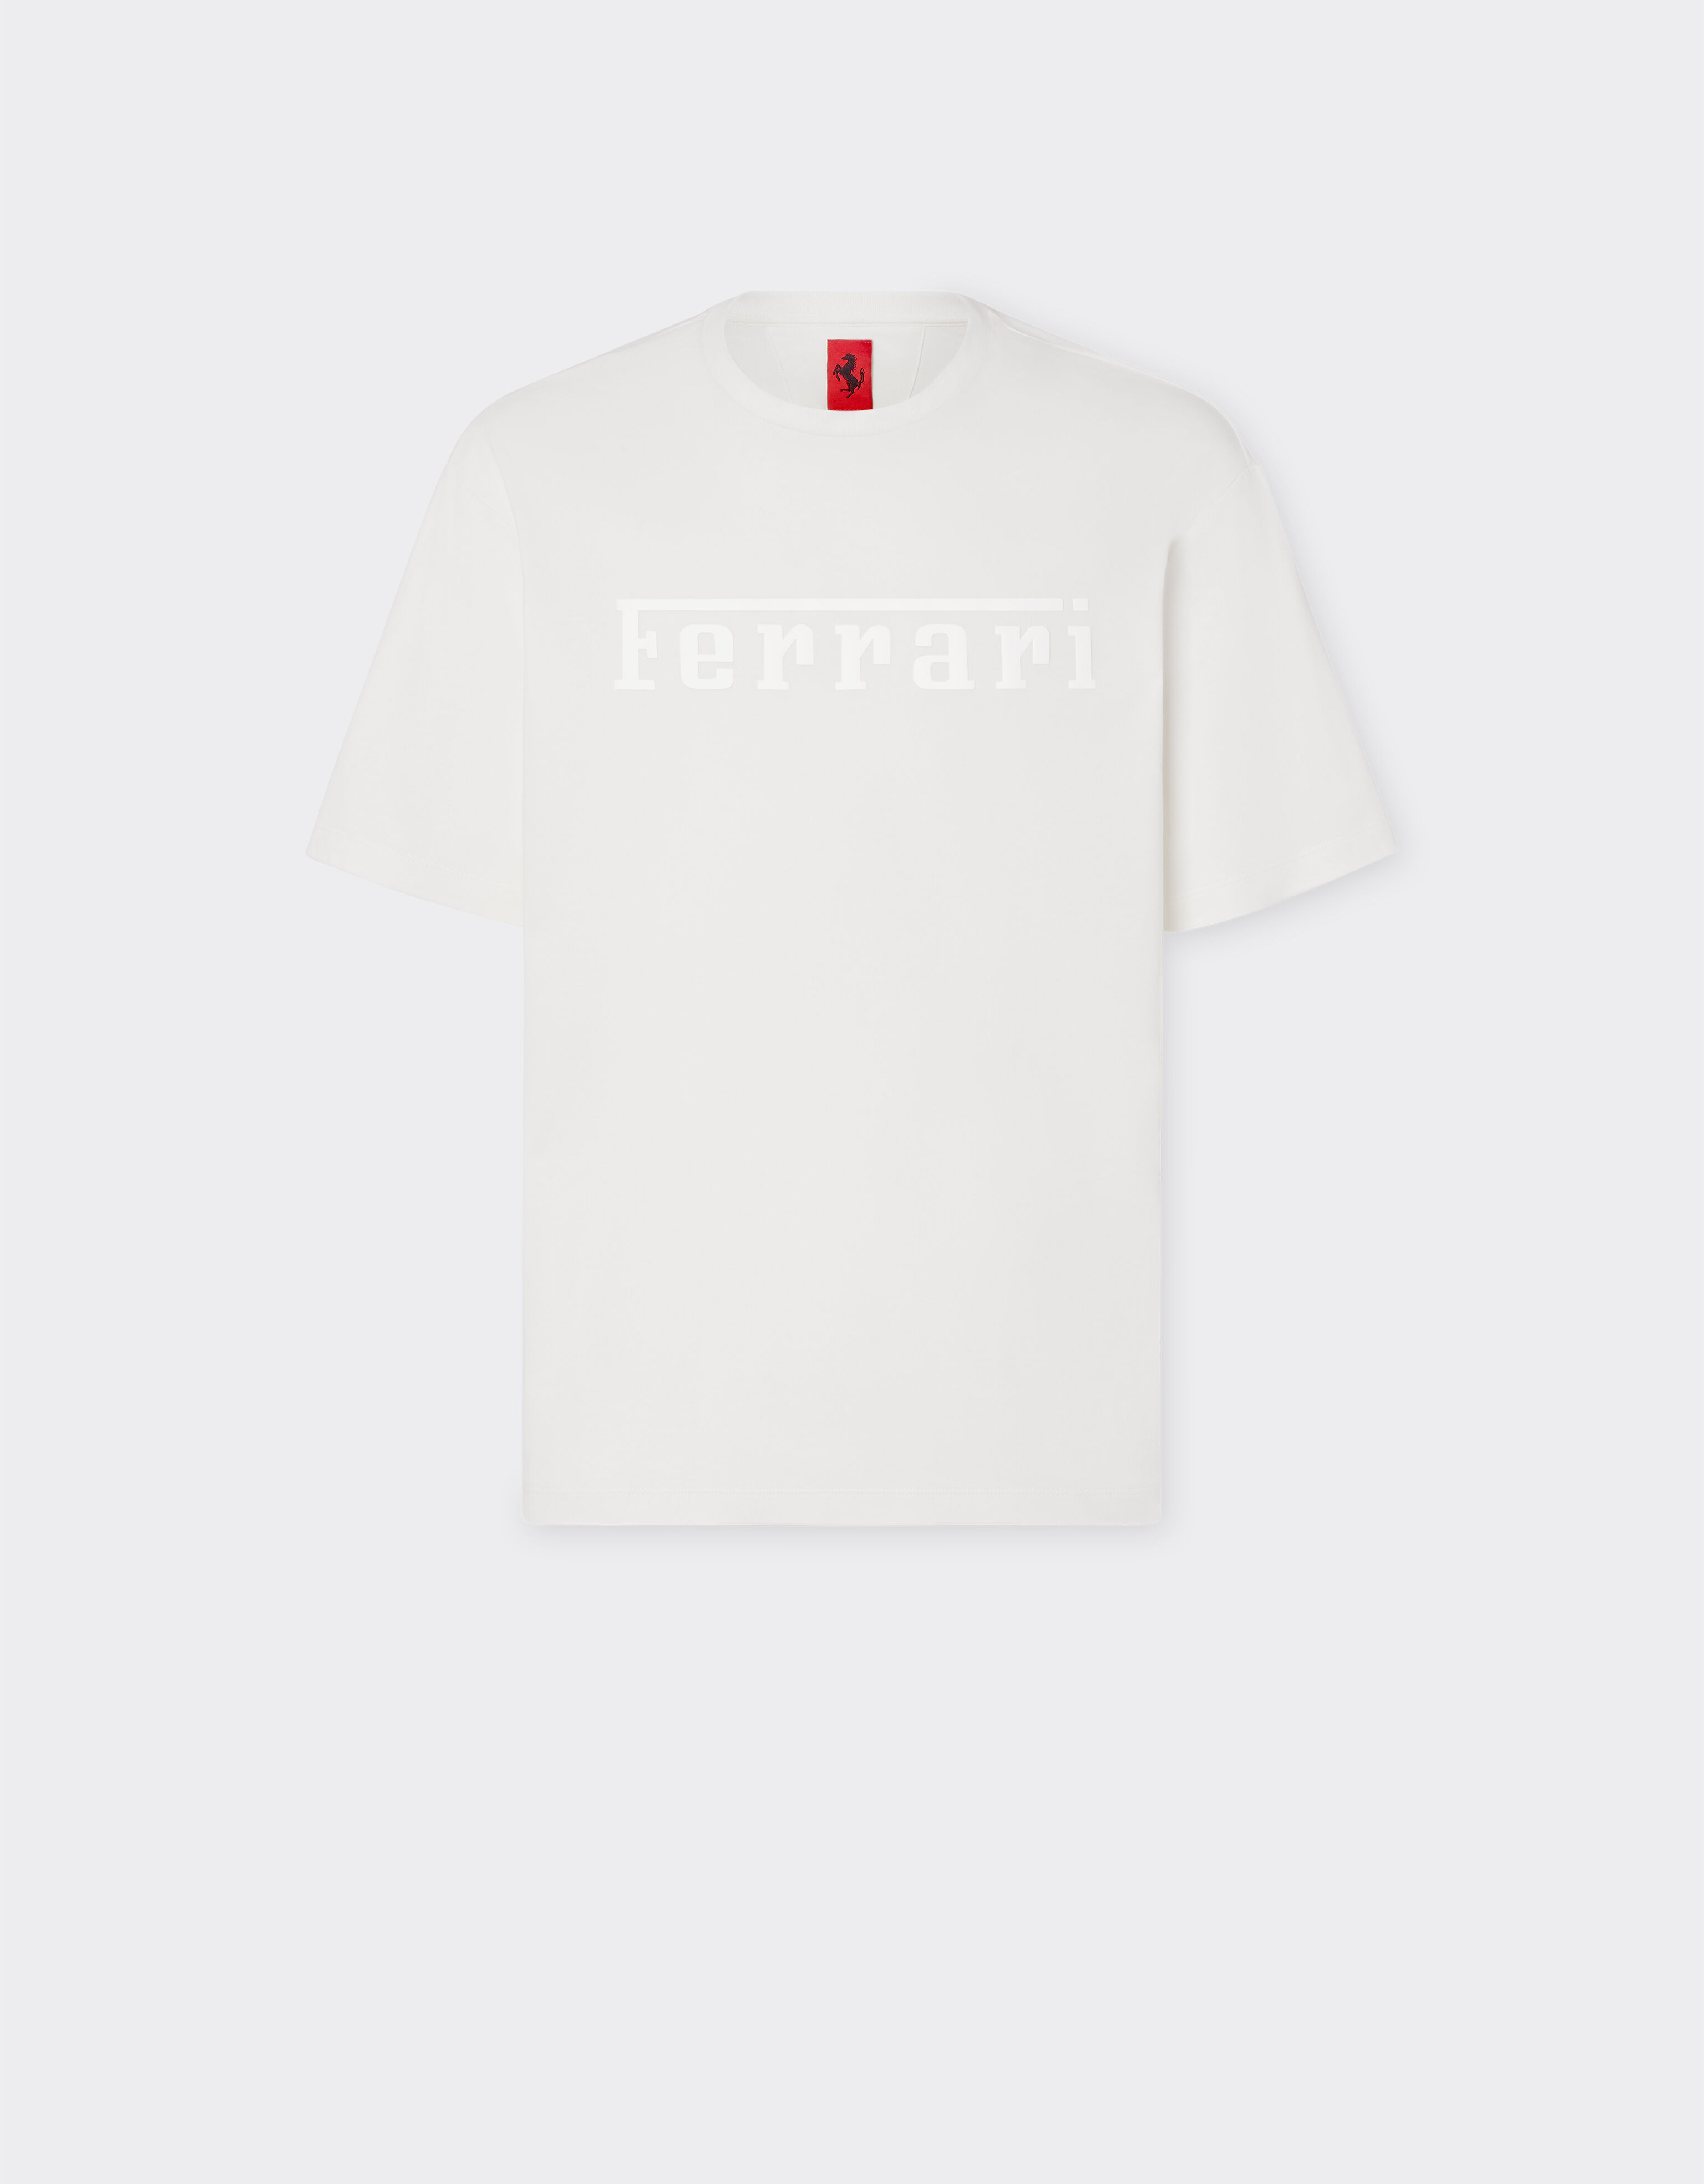 Ferrari Cotton T-shirt with Ferrari logo Optical White 48115f